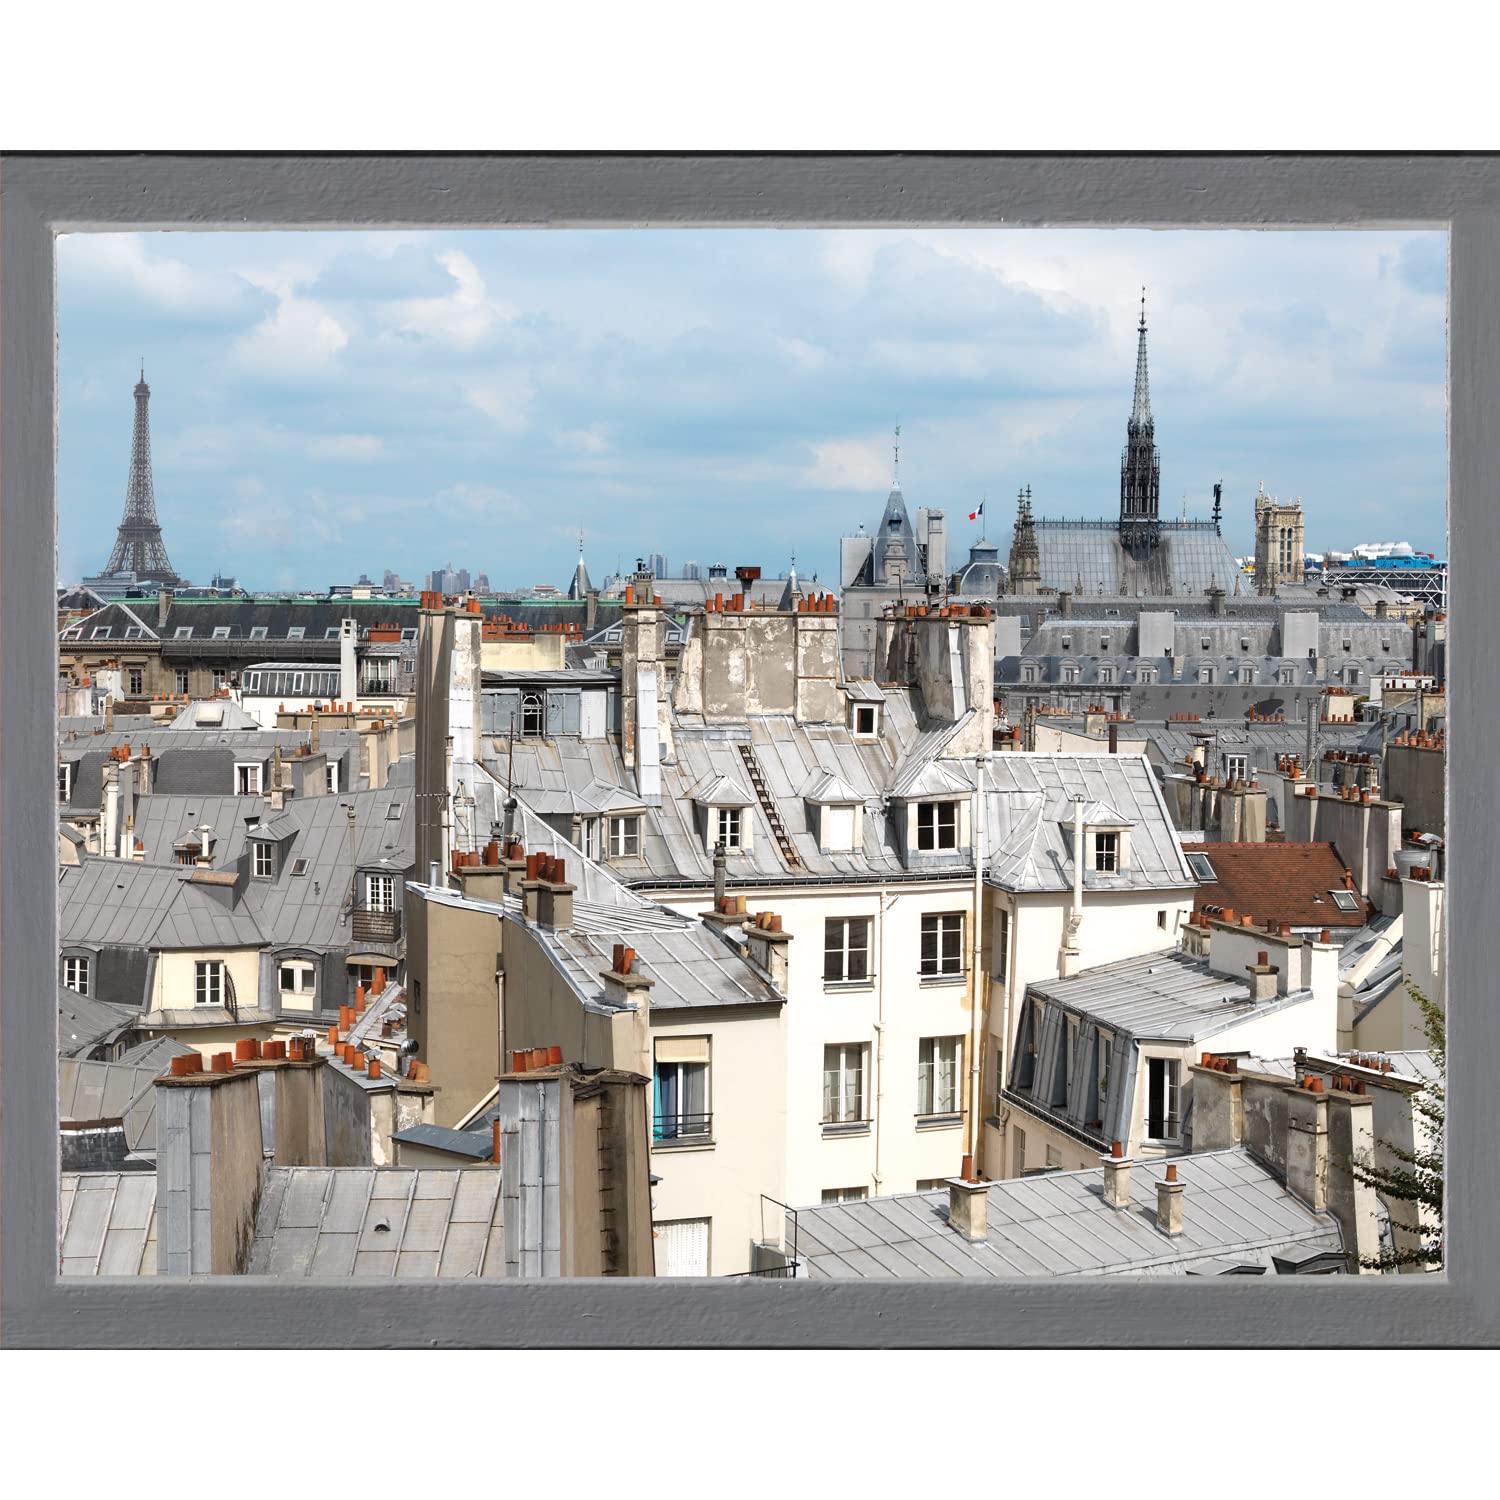 Plage Self Sticker Window Trompe L'Oeil Adhesive (Polystick) -Paris Roofs (60x75 cm), Vinyl, Colorful, 75 x 0.1 x 60 cm